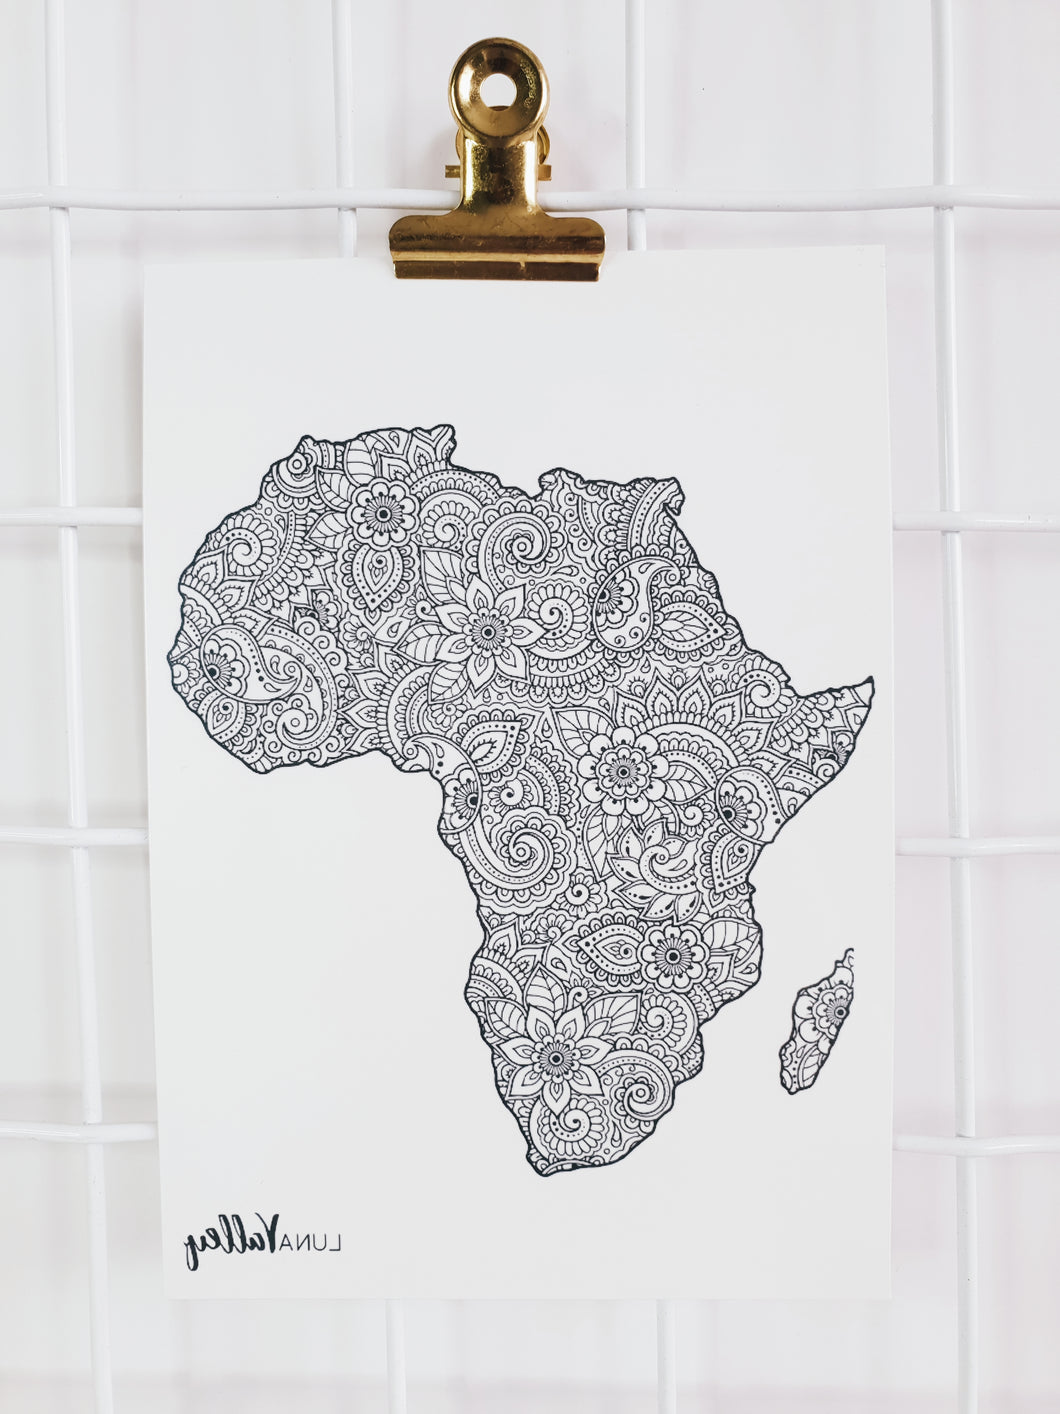 Africa Map tattoo